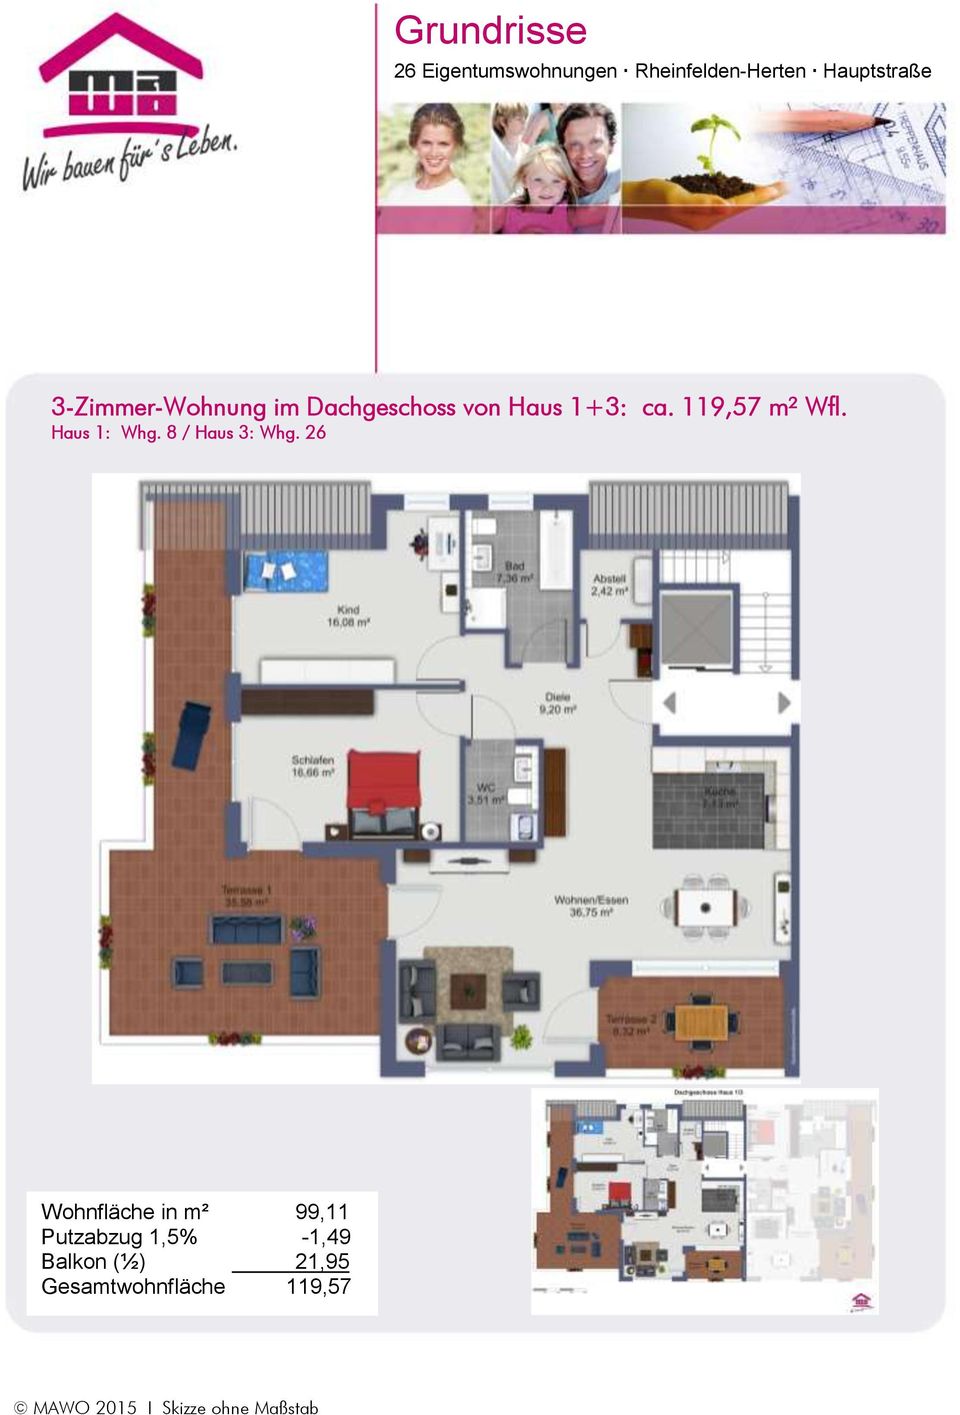 26 Wohnfläche in m² 99,11 Putzabzug 1,5% -1,49 Balkon